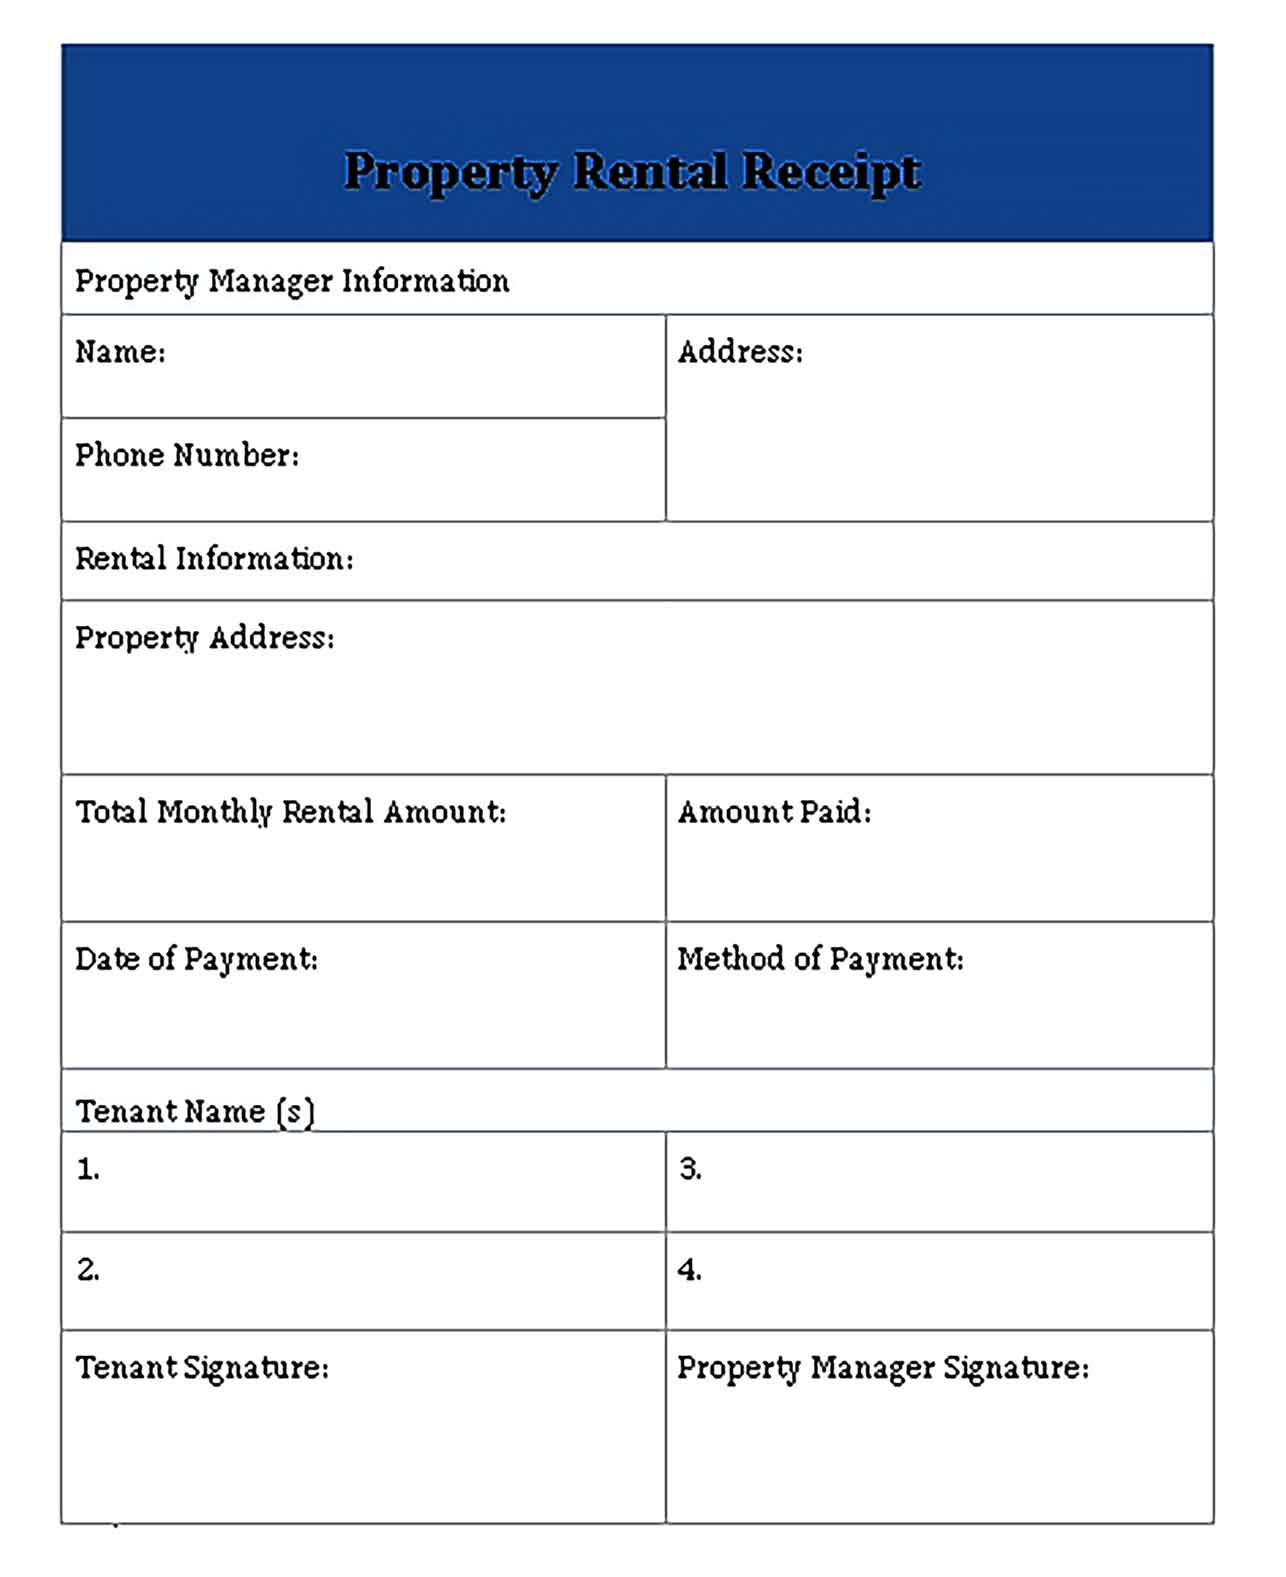 Sample Property Rental Receipt Templates 1